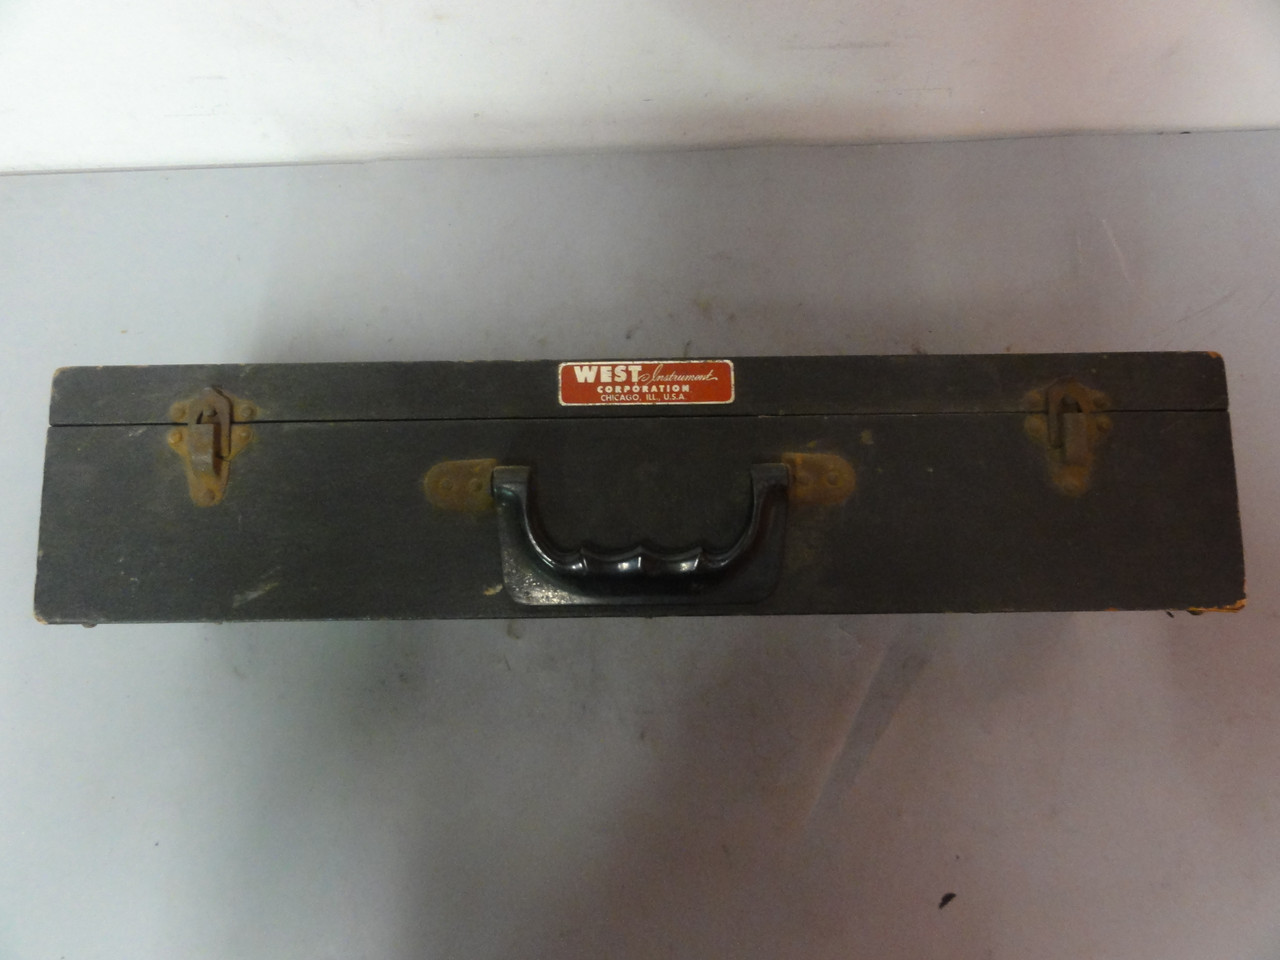 Vintage West Instrument Corporation Model B Temperature Gauge TCA-0077 With Probe In Original Box